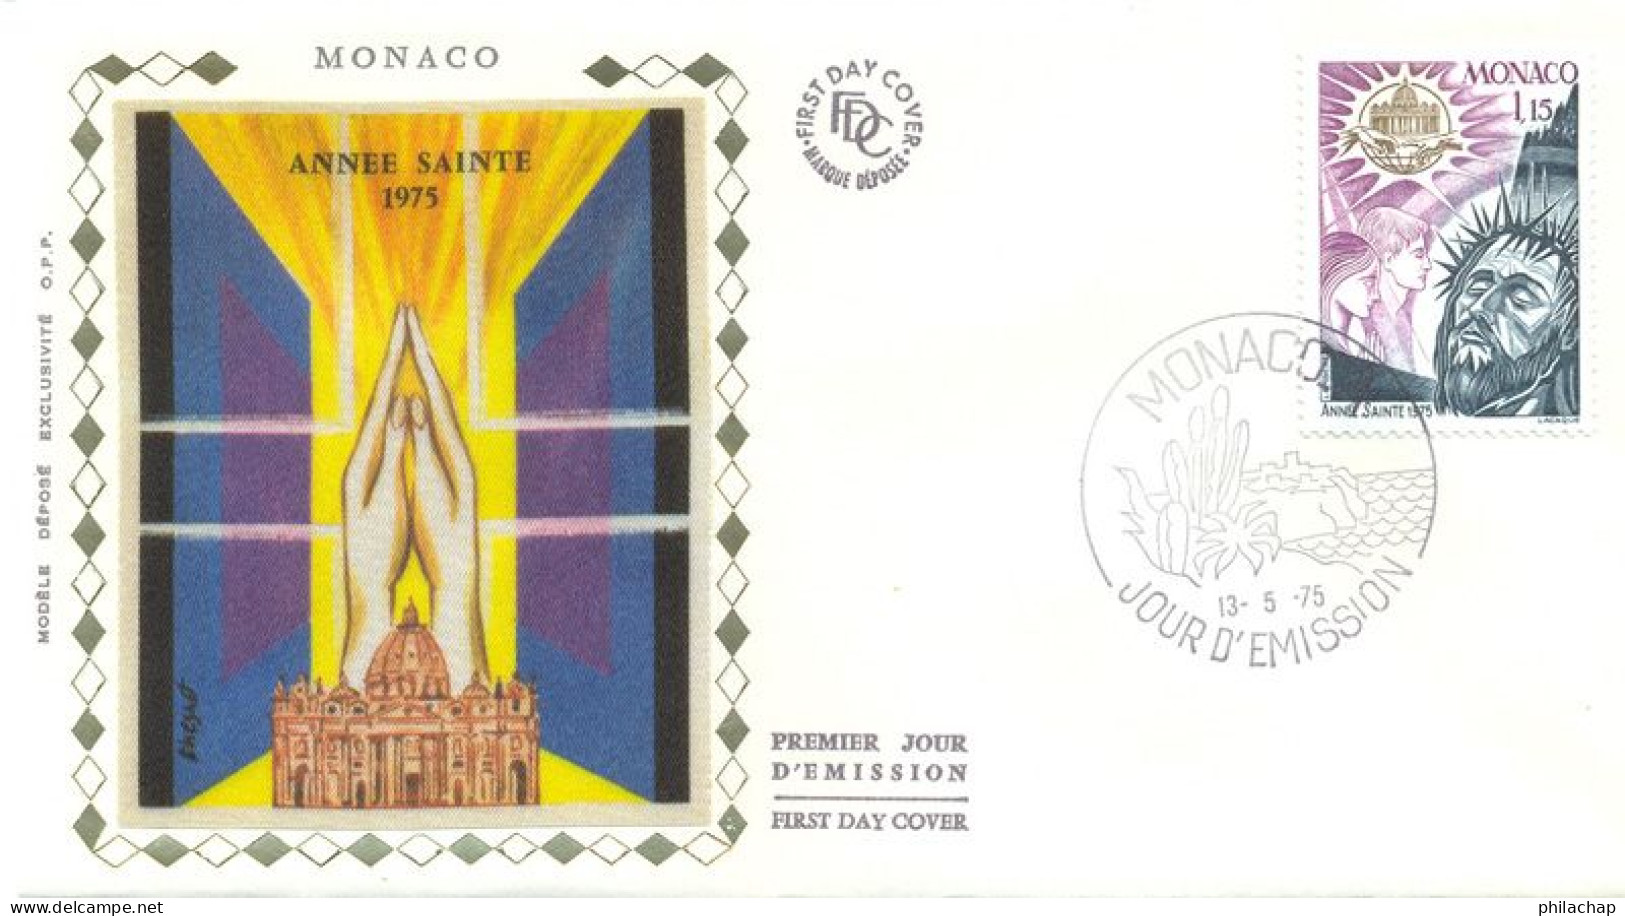 Monaco FDC 1975 Yvert 1015 Annee Sainte - FDC